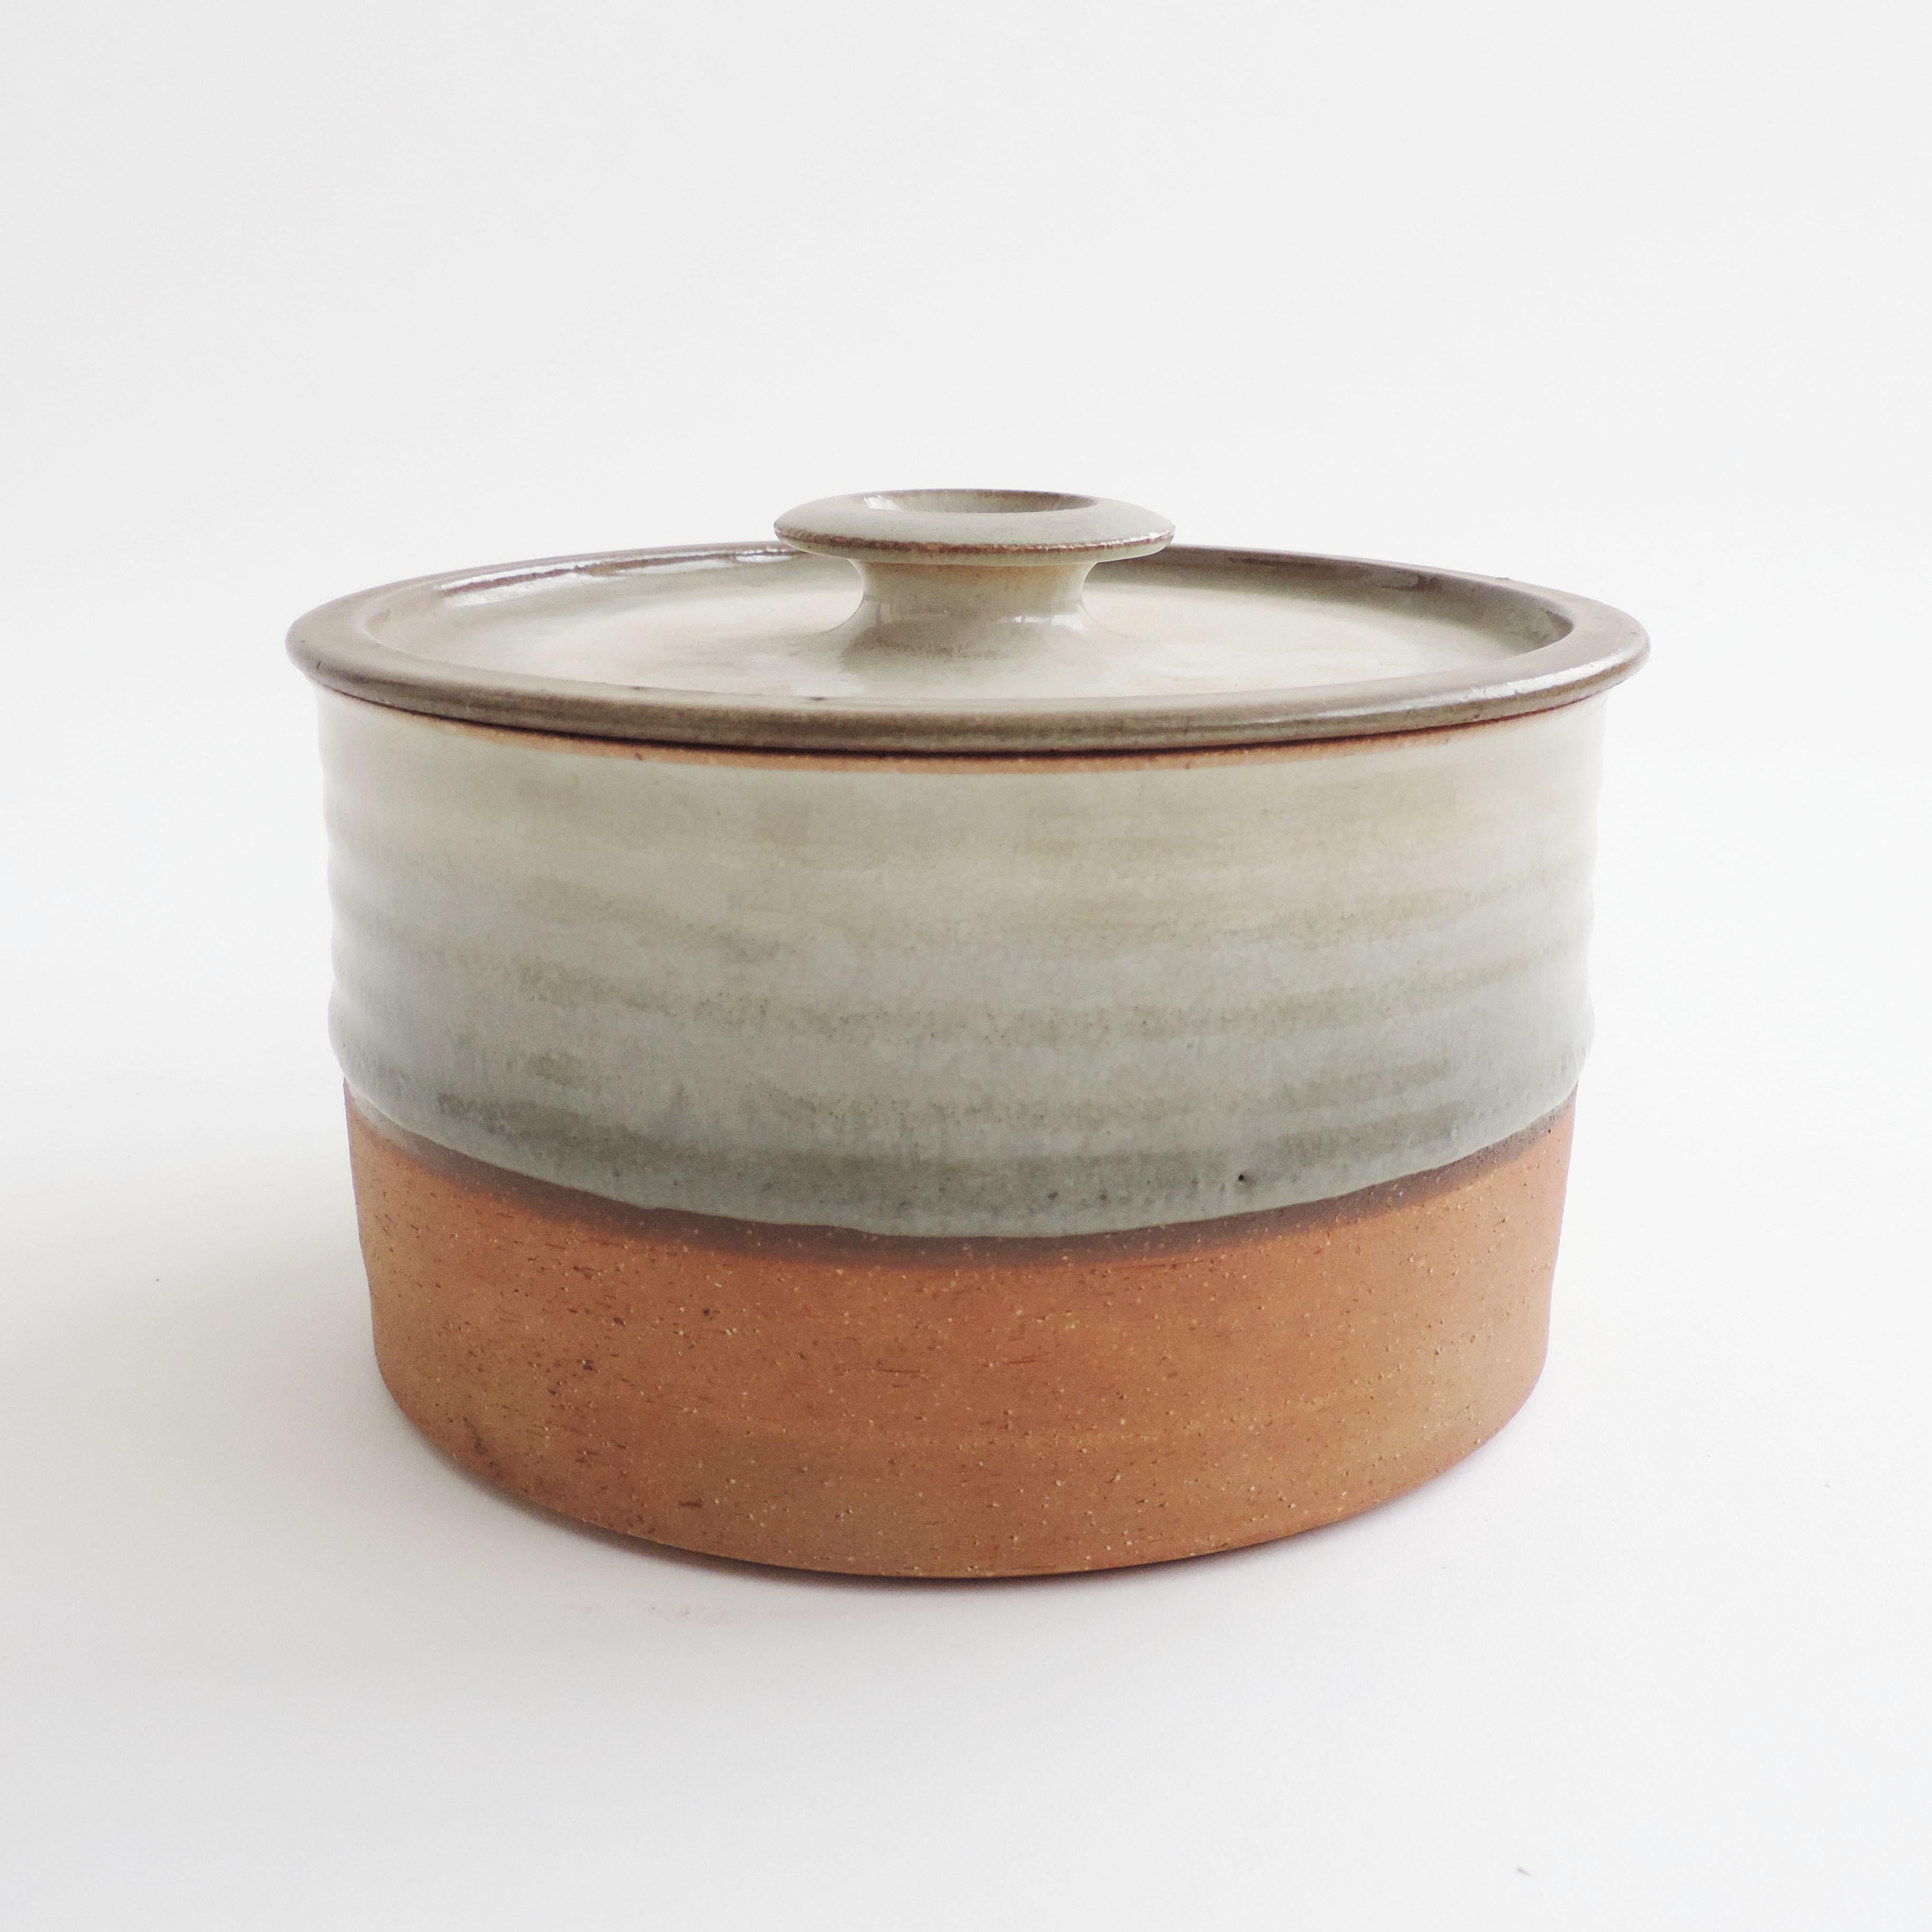 Ceramic jar and cover by Nanni Valentini for Ceramica Arcore, Italy 1970s.